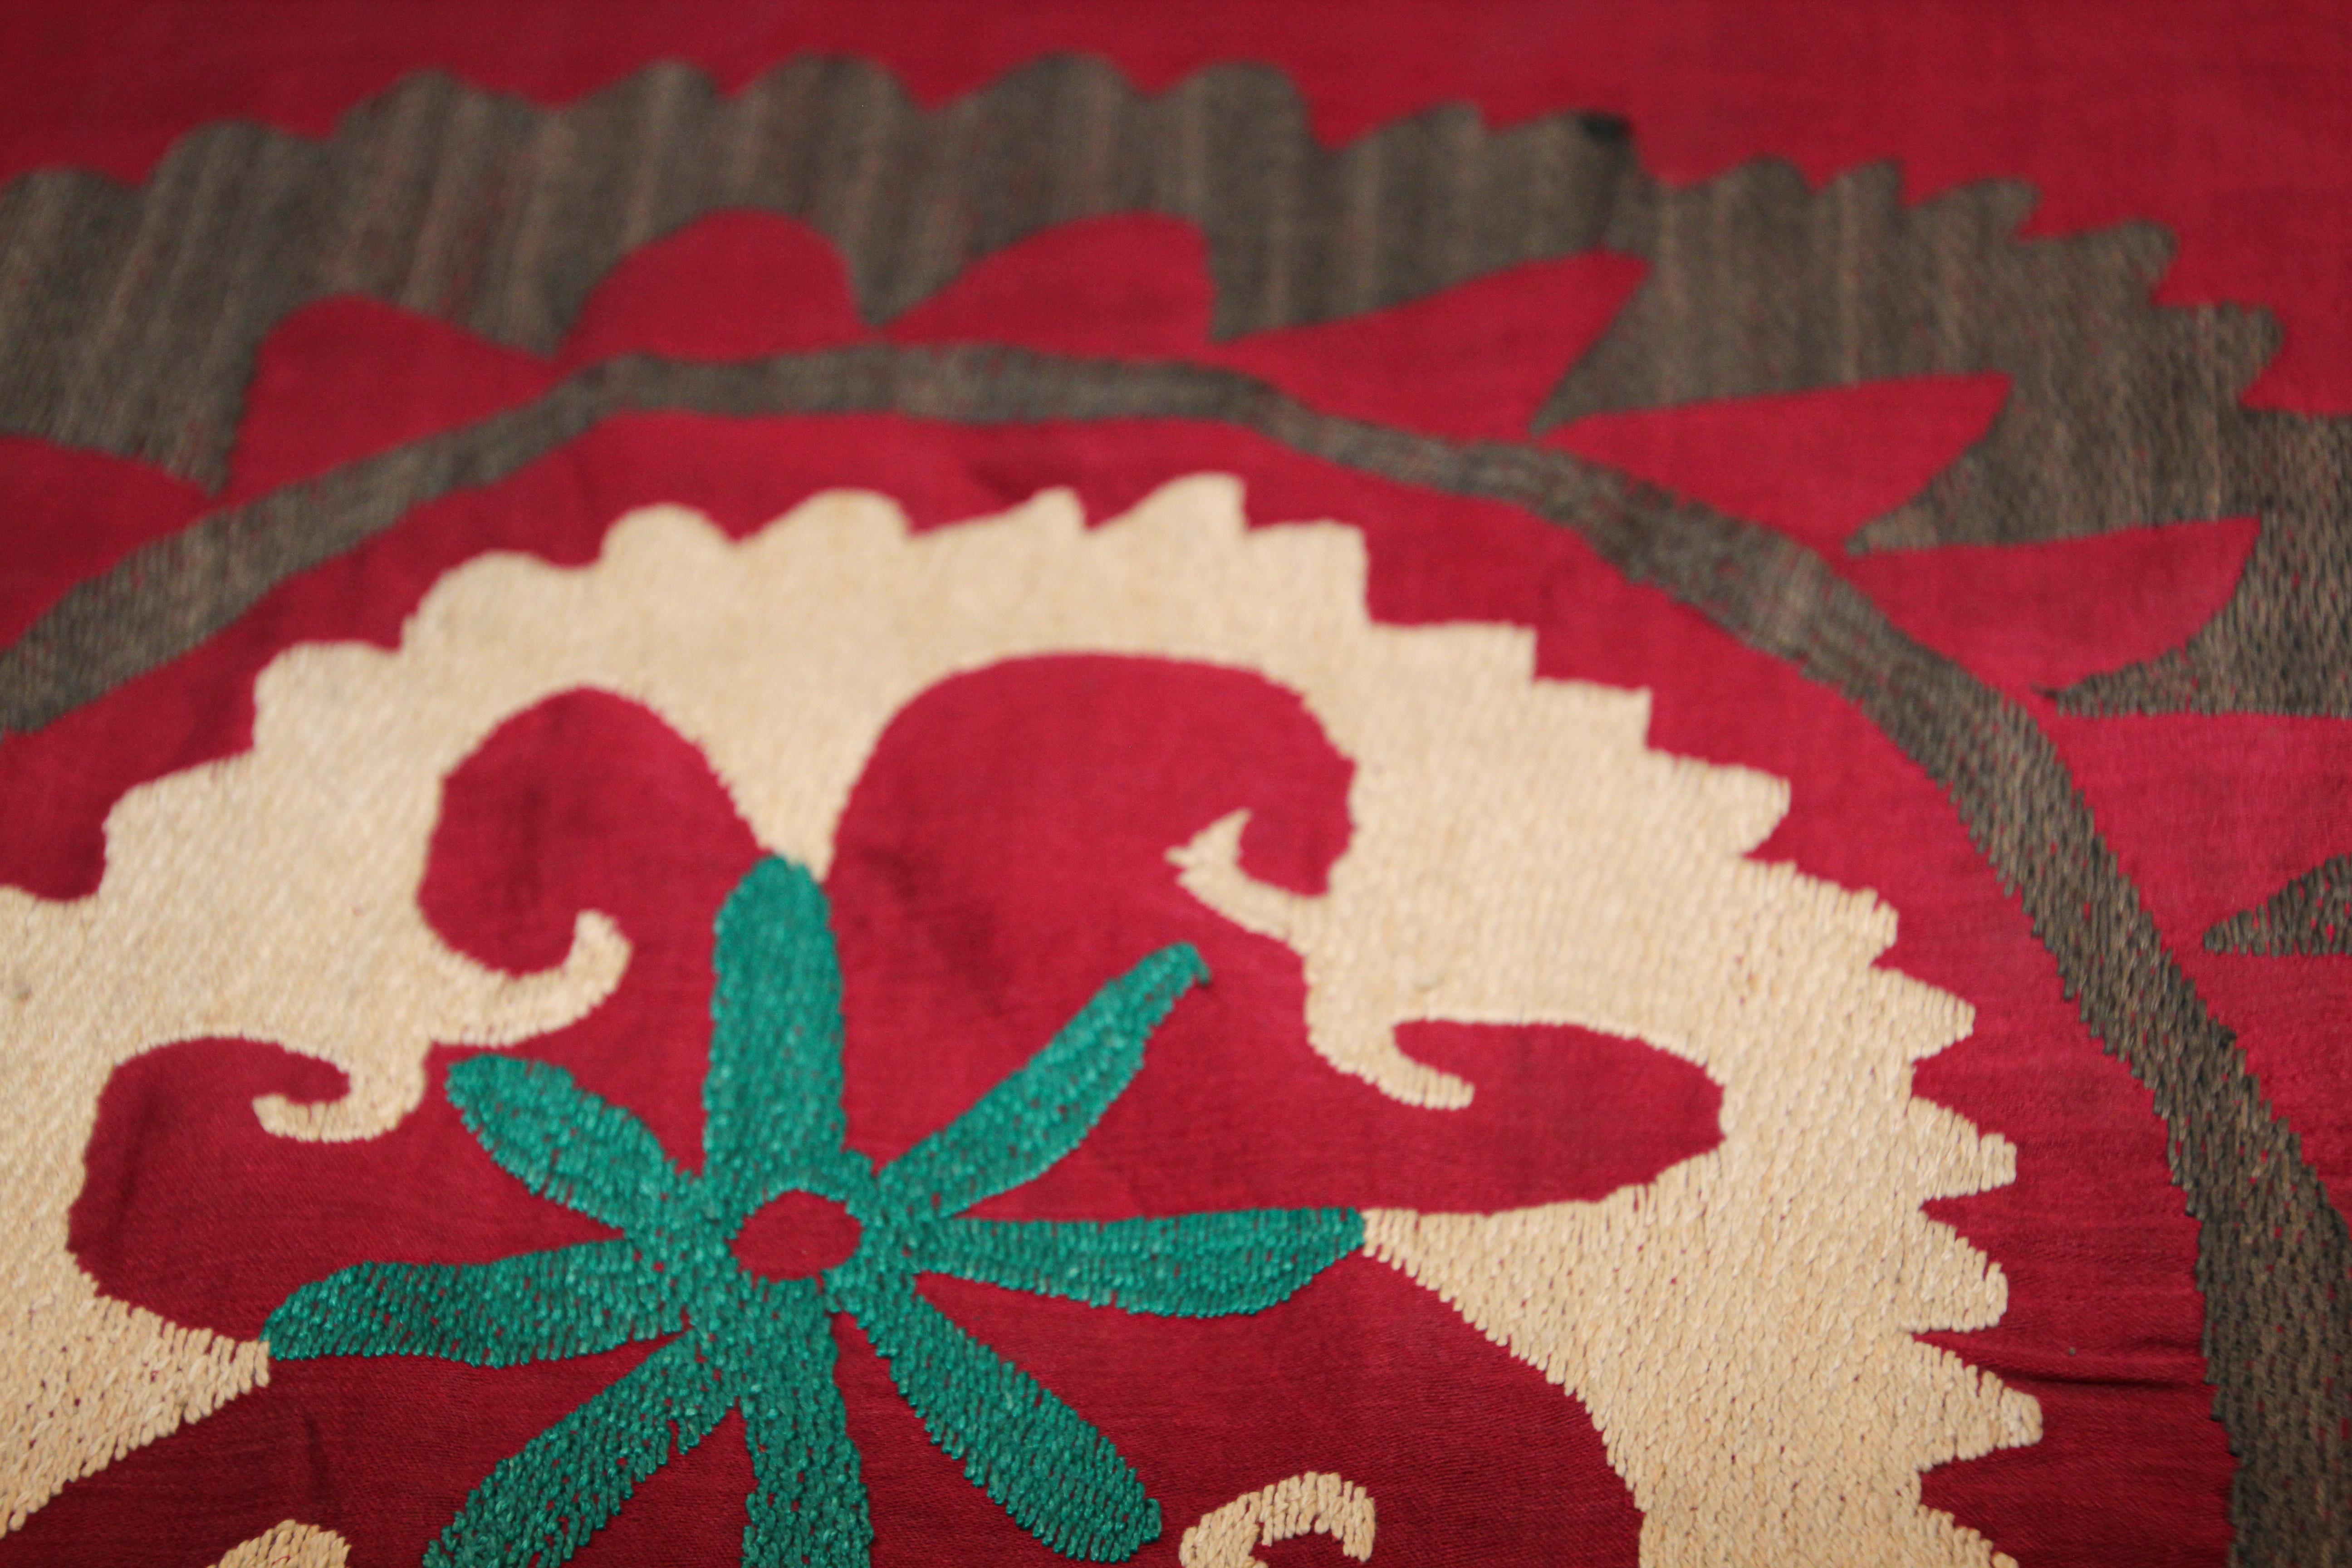 Vintage Uzbek Suzani Needlework Textile Blanket or Tapestry 11